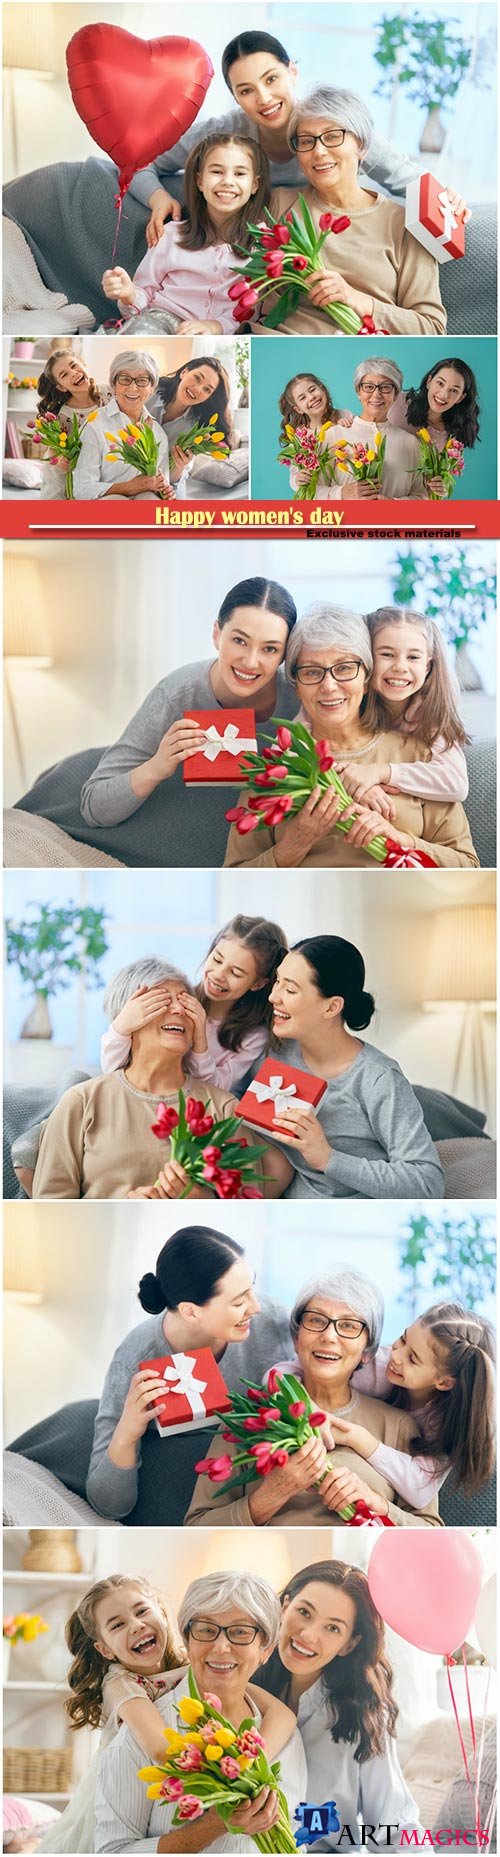 Happy women's day, grandma, mum and girl smiling and hugging